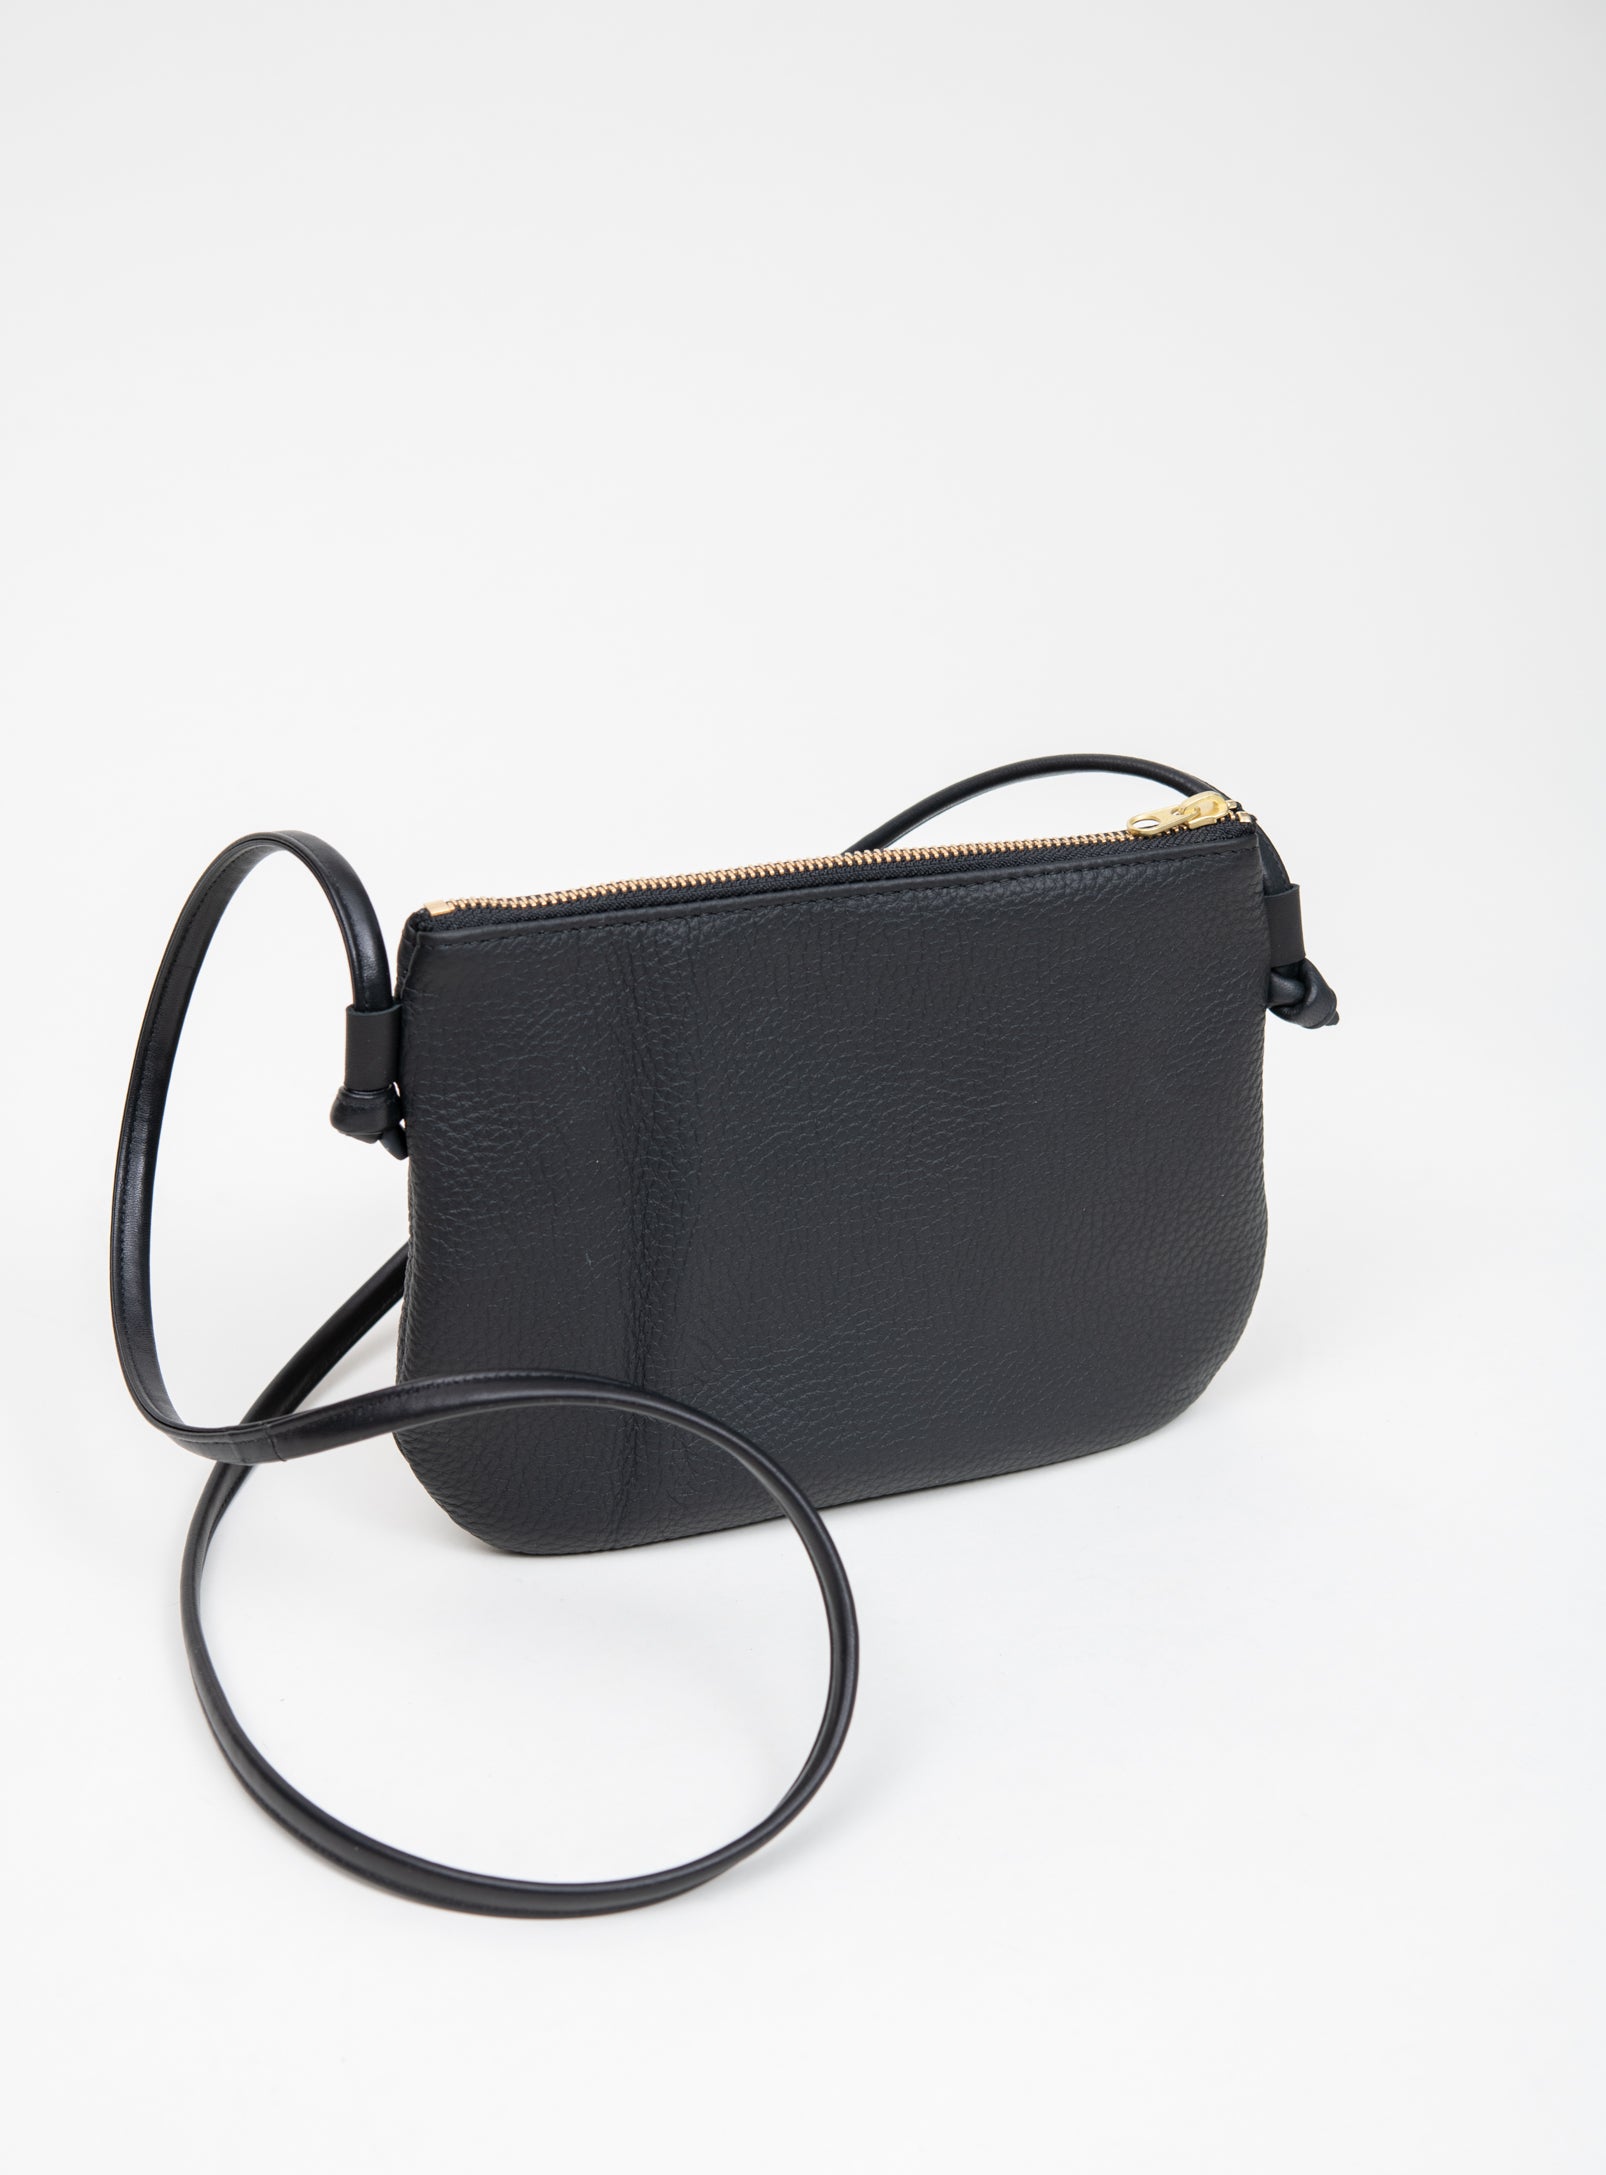 Handmade square bottom gift bag, small purse or... - Depop